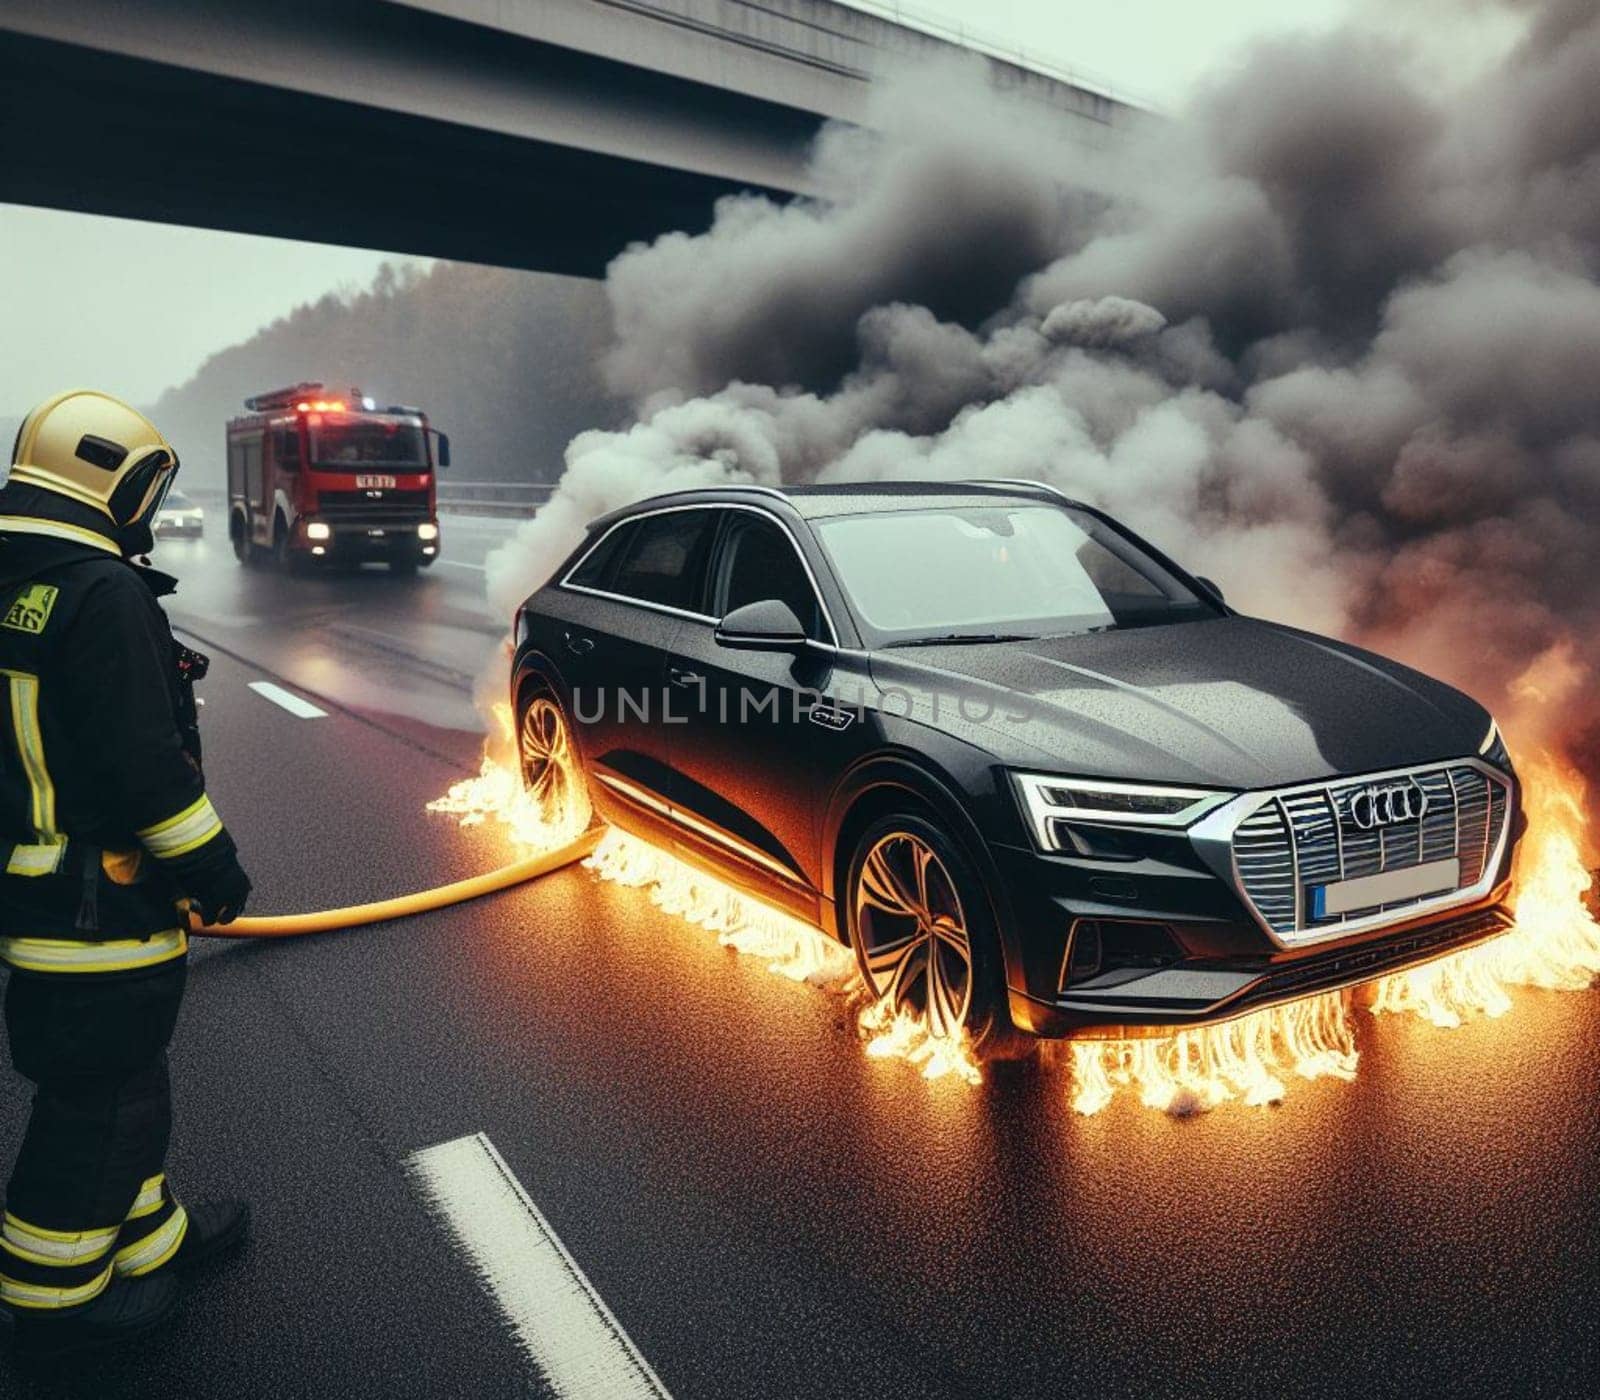 electric hybrid car suv burn bottom chasis, firefighter apply foam to extinguish flames big smoke ai generated